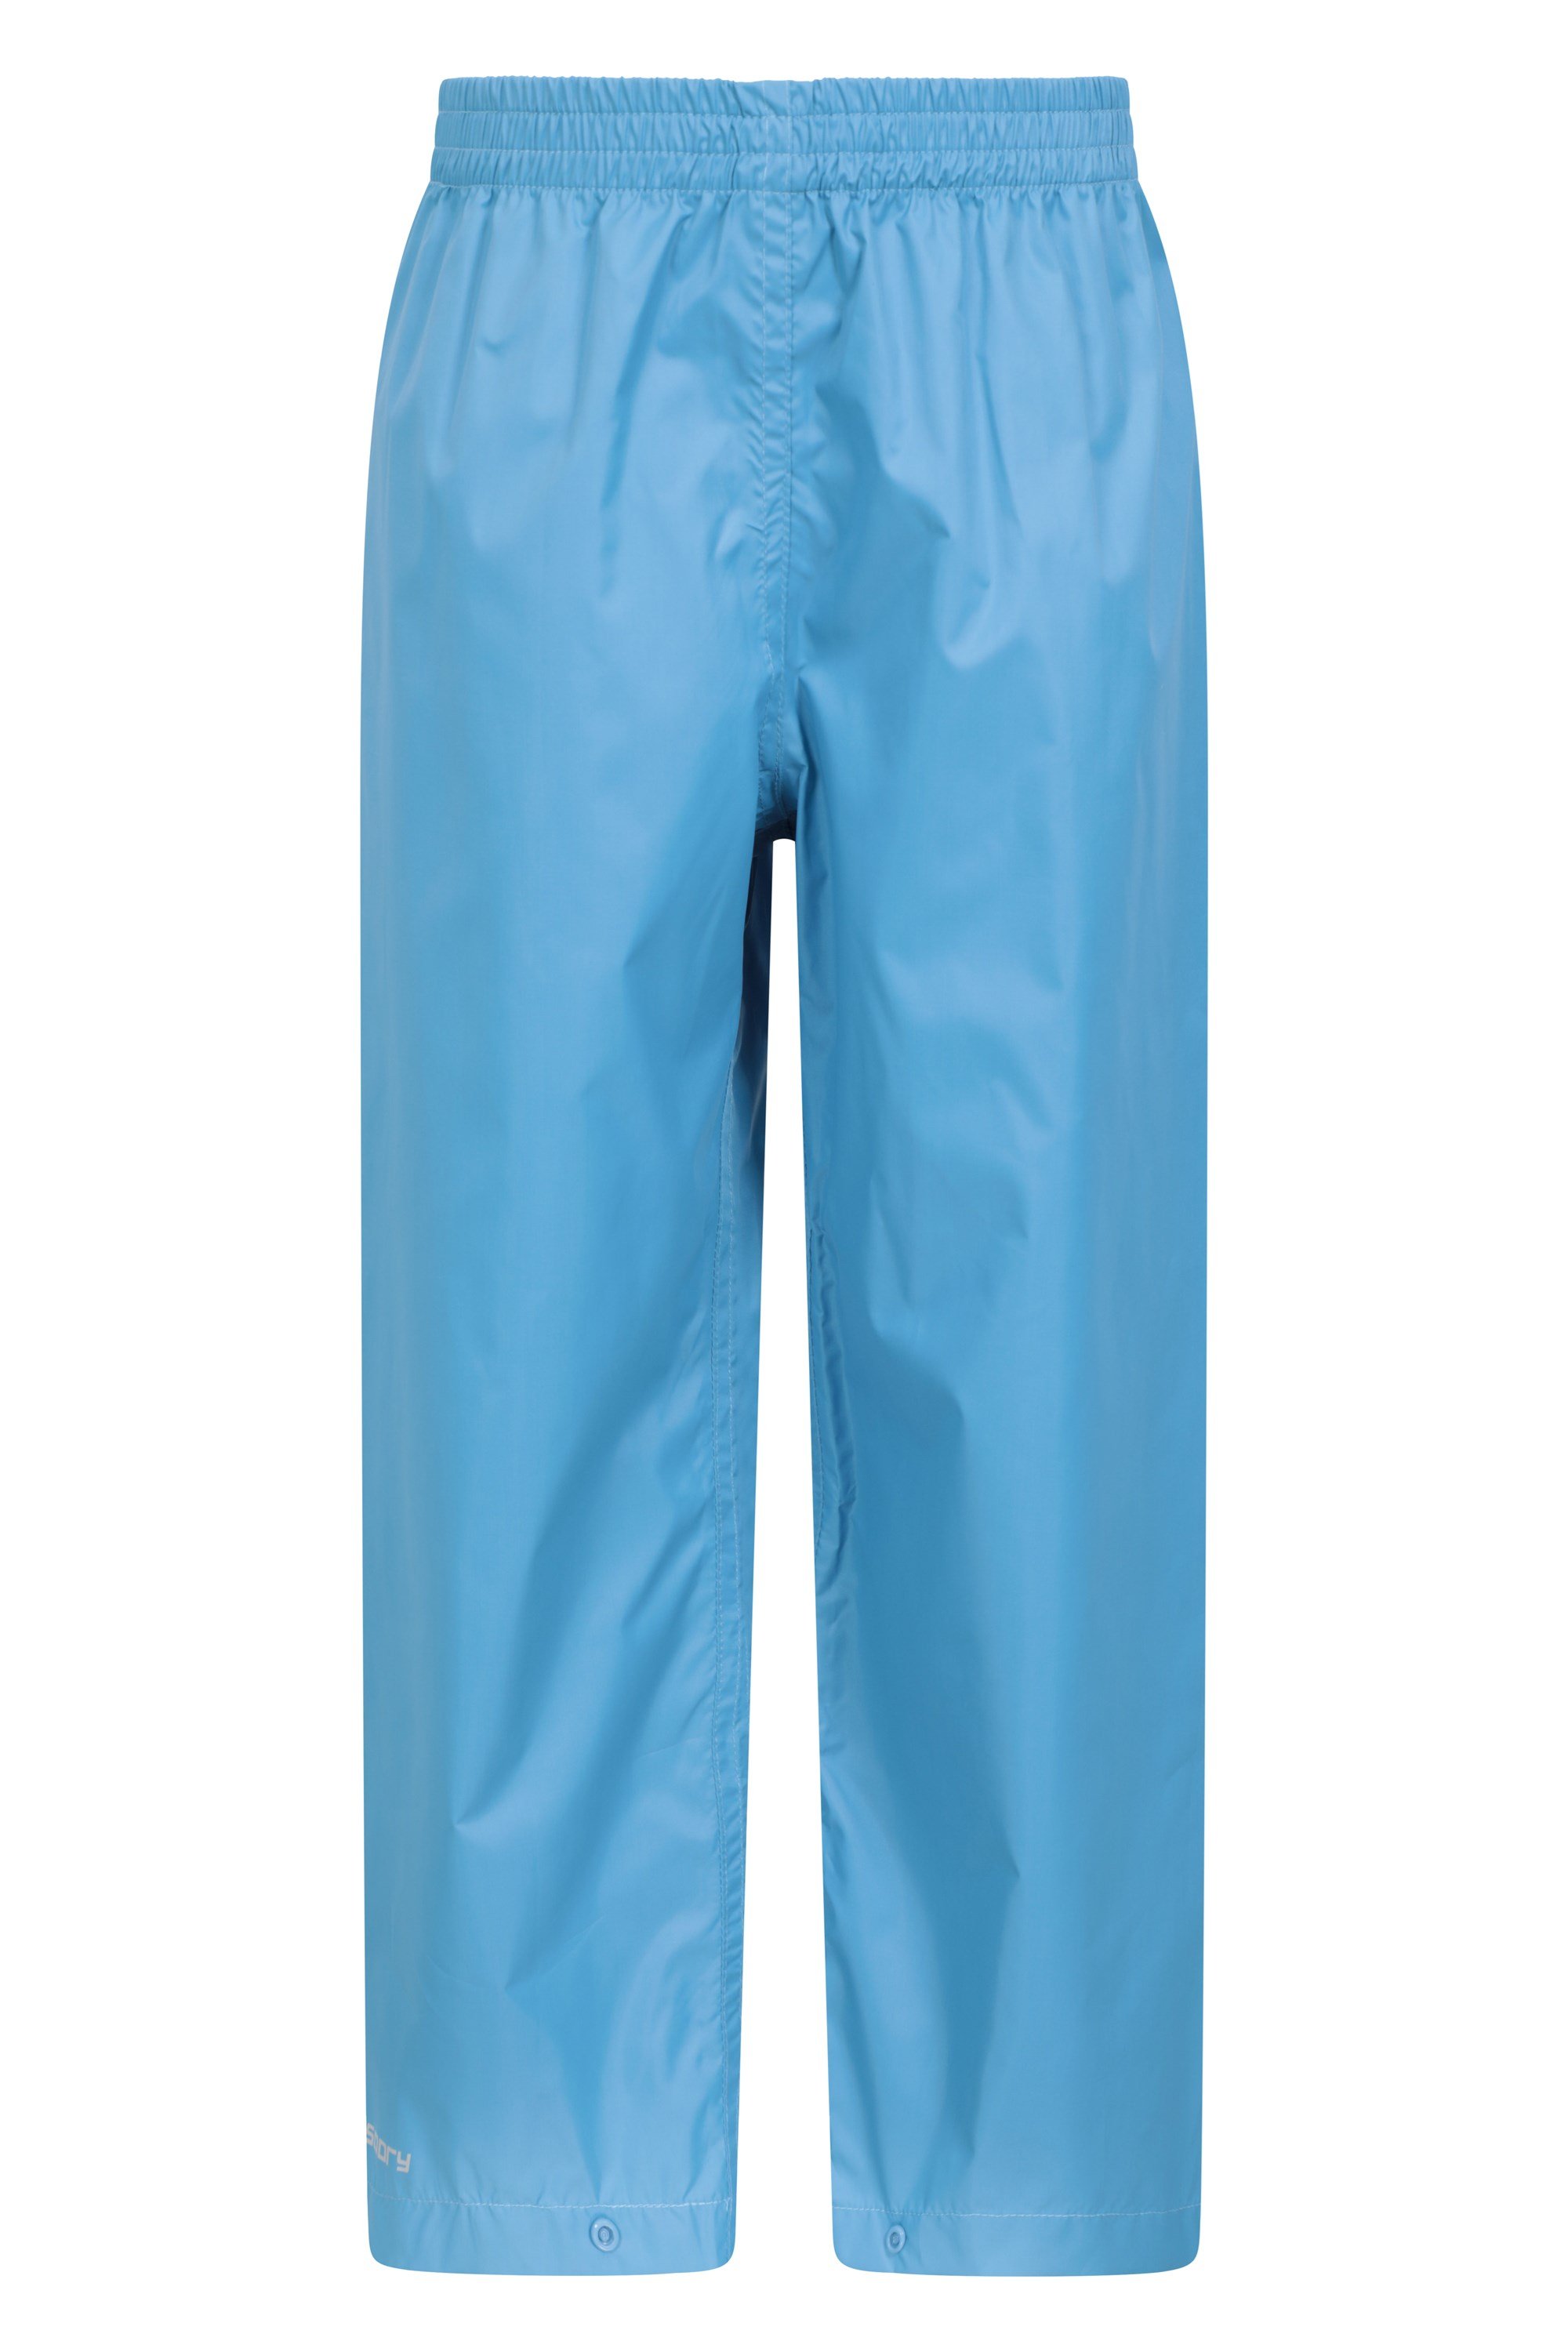 Kids Rain Pants  Shop Waterproof Trousers  Didriksons